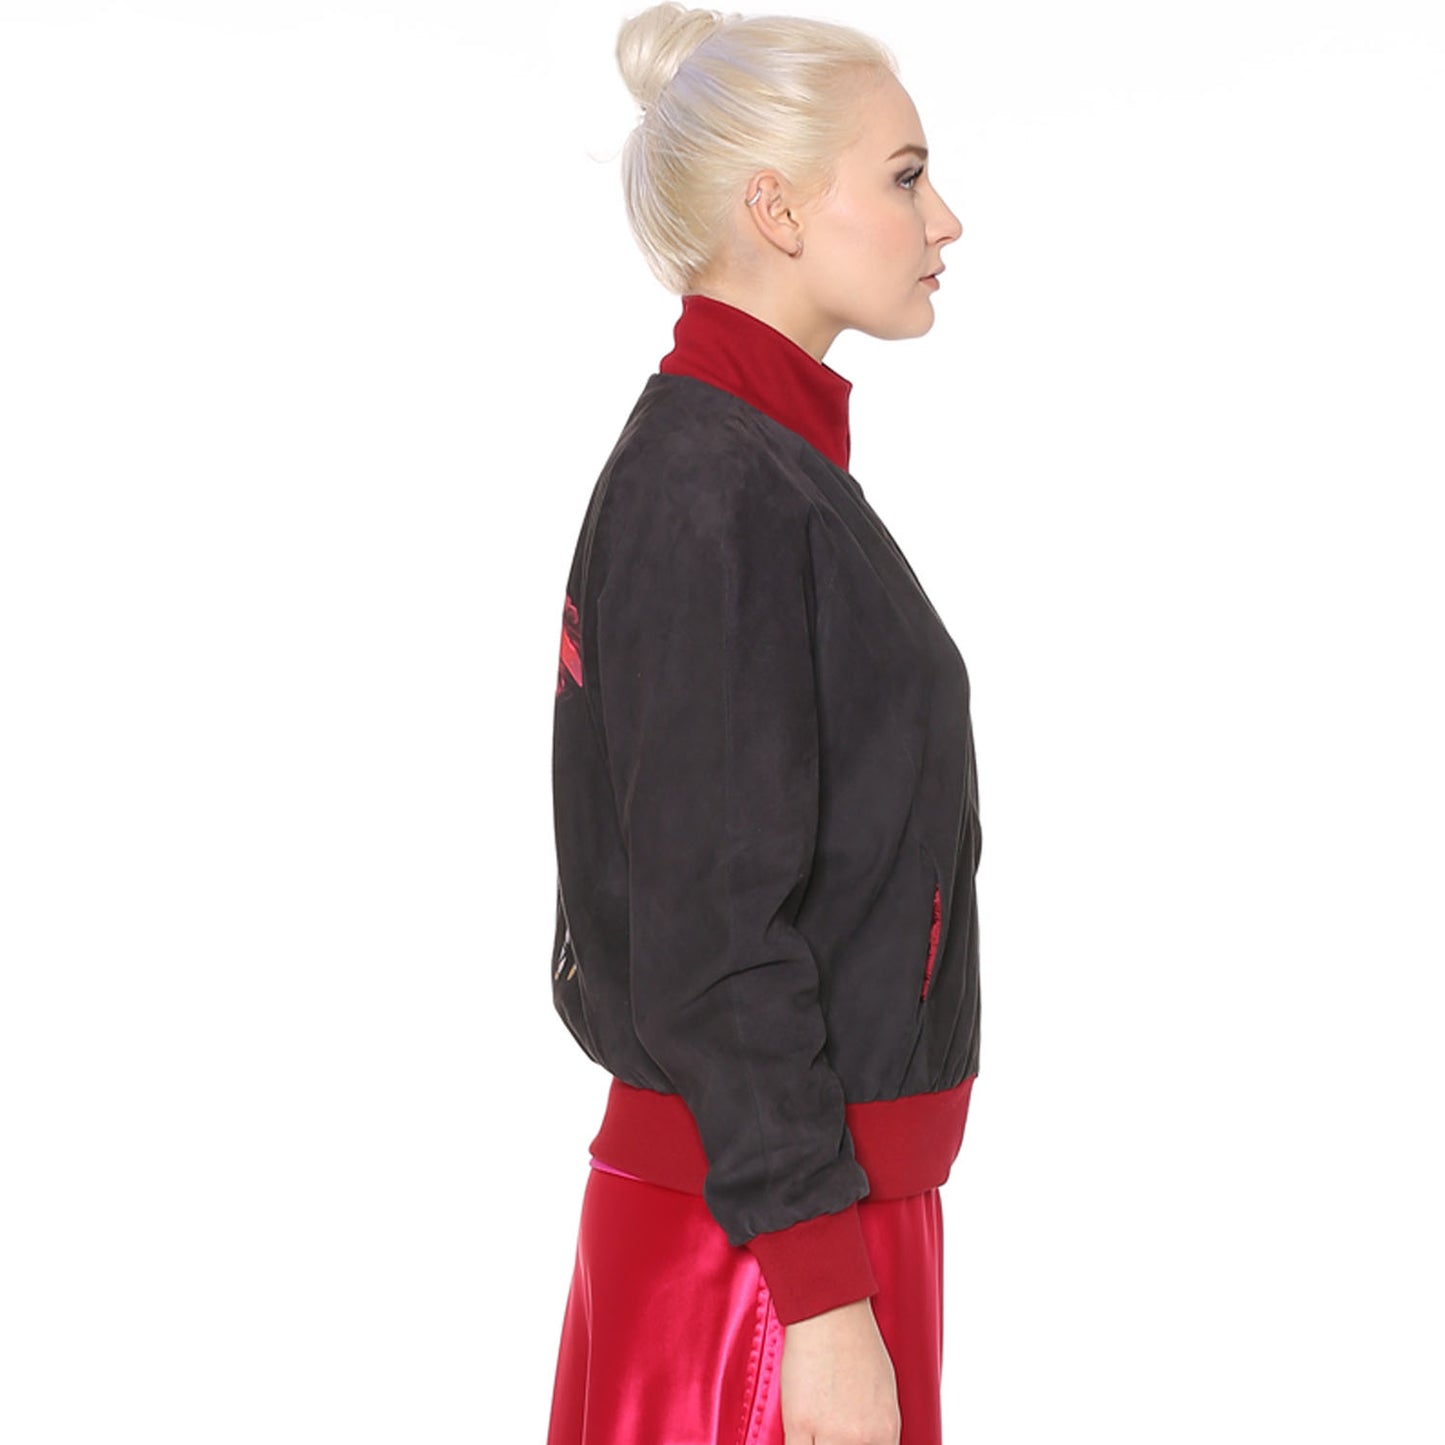 Leather Jacket with Handpainted Ballerina Fuchsia - Natalia Kludt